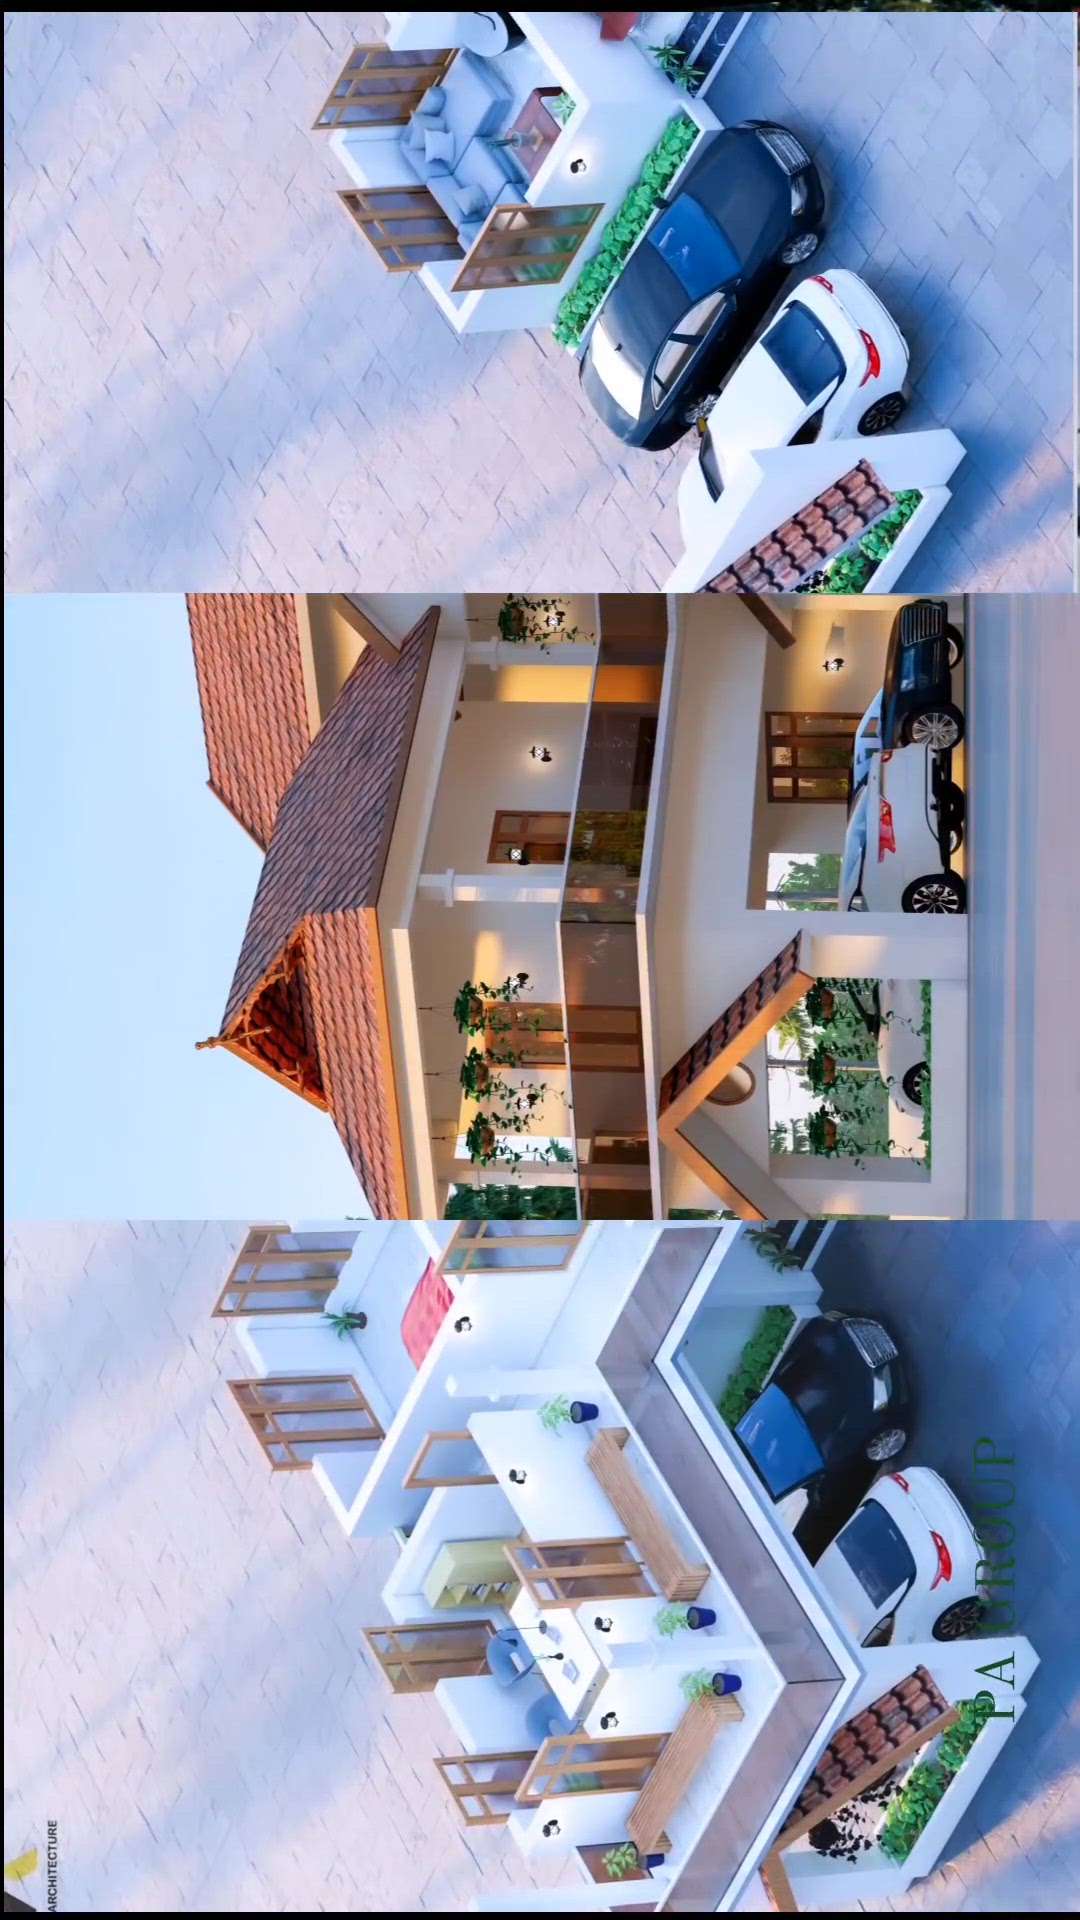 DREAM HOME 🤟💥
#KeralaStyleHouse #MrHomeKerala #HomeAutomation #ElevationHome